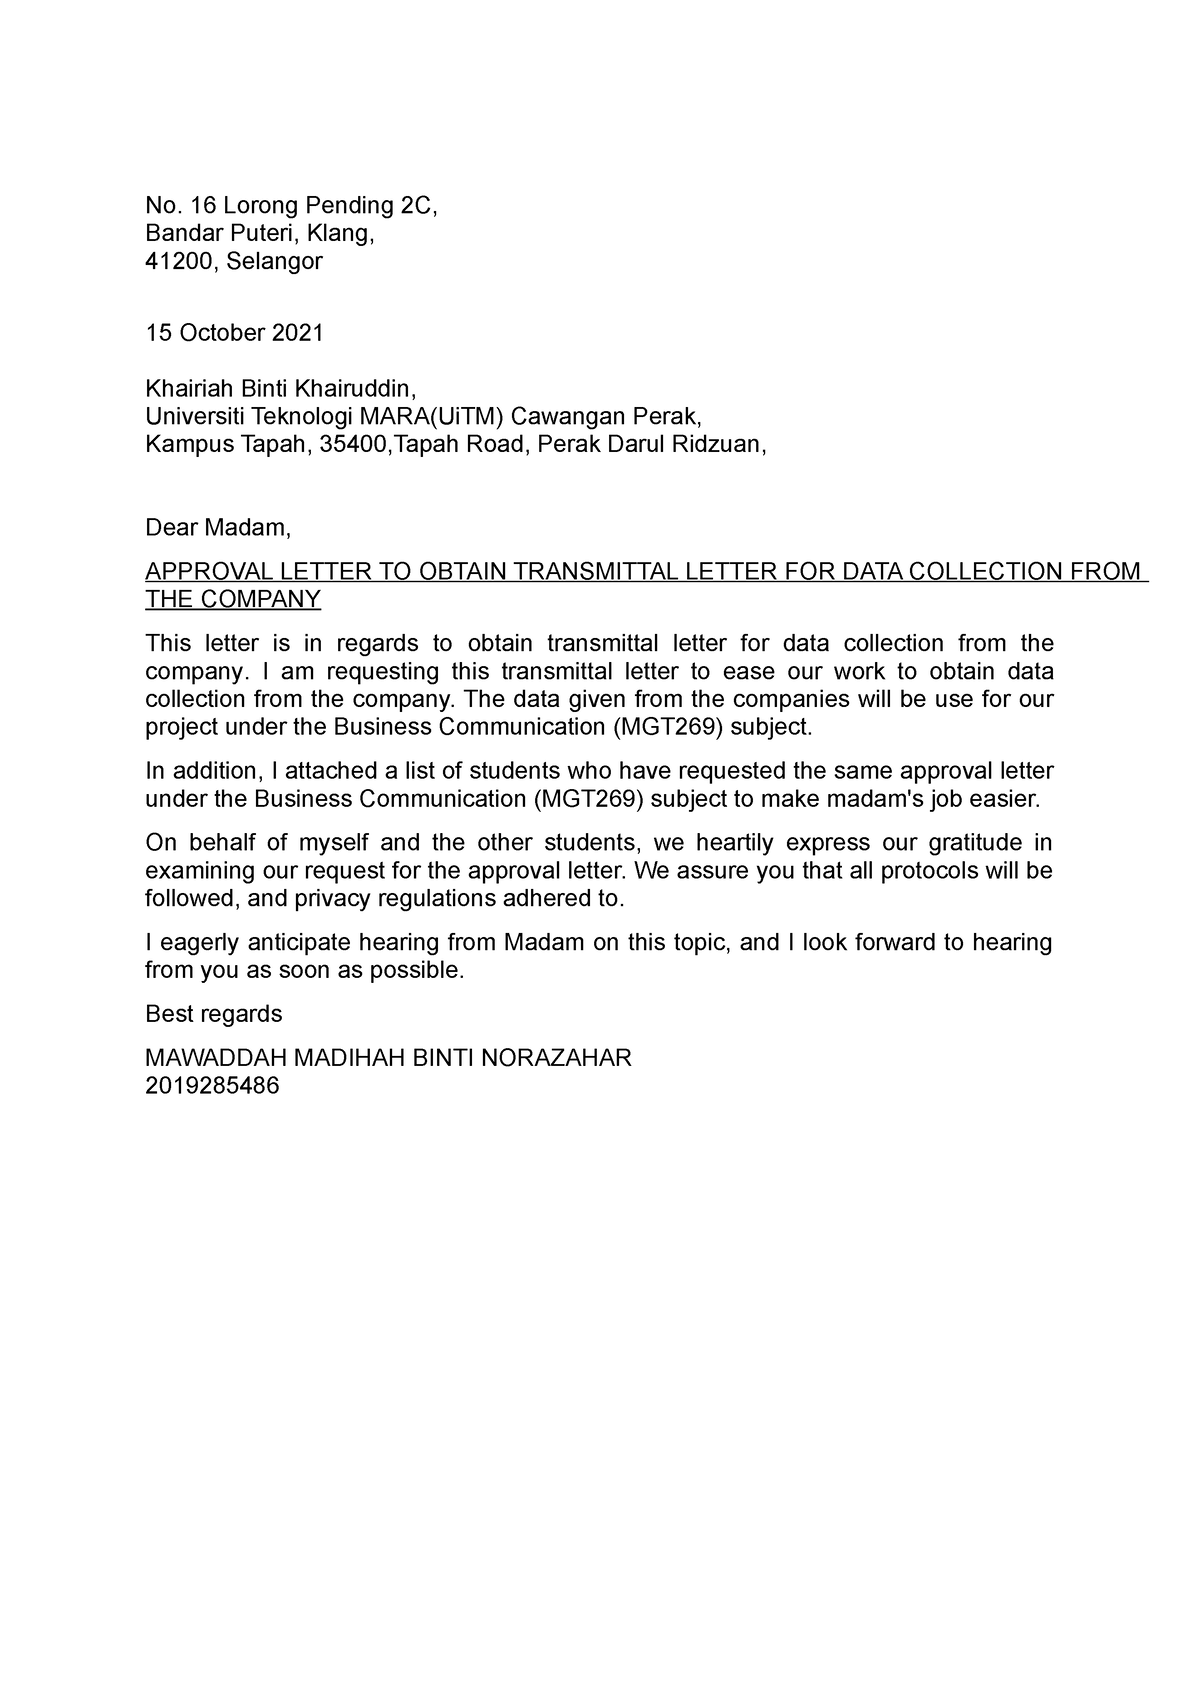 Request Approval Letter - No. 16 Lorong Pending 2C, Bandar Puteri ...